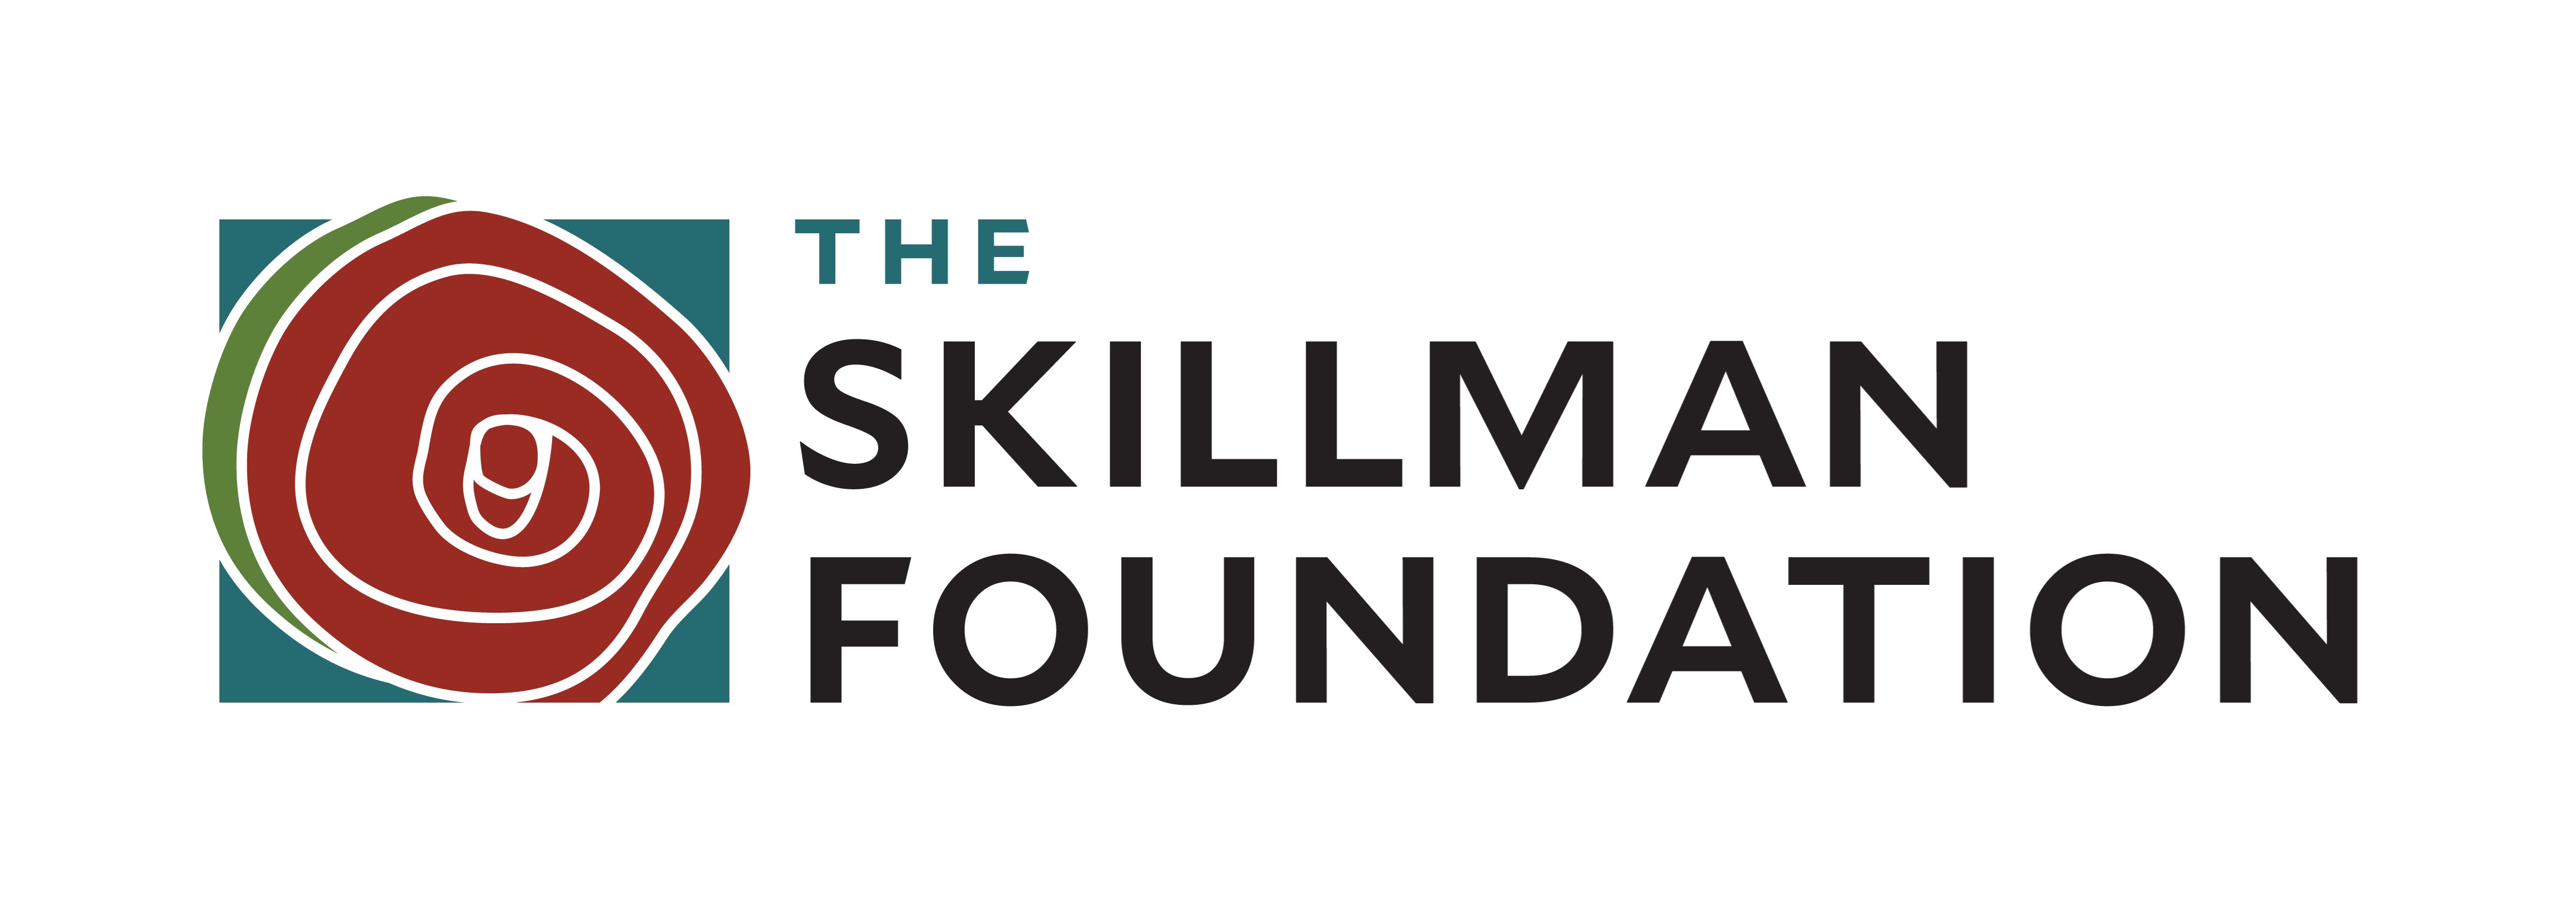 The Skillman Foundation